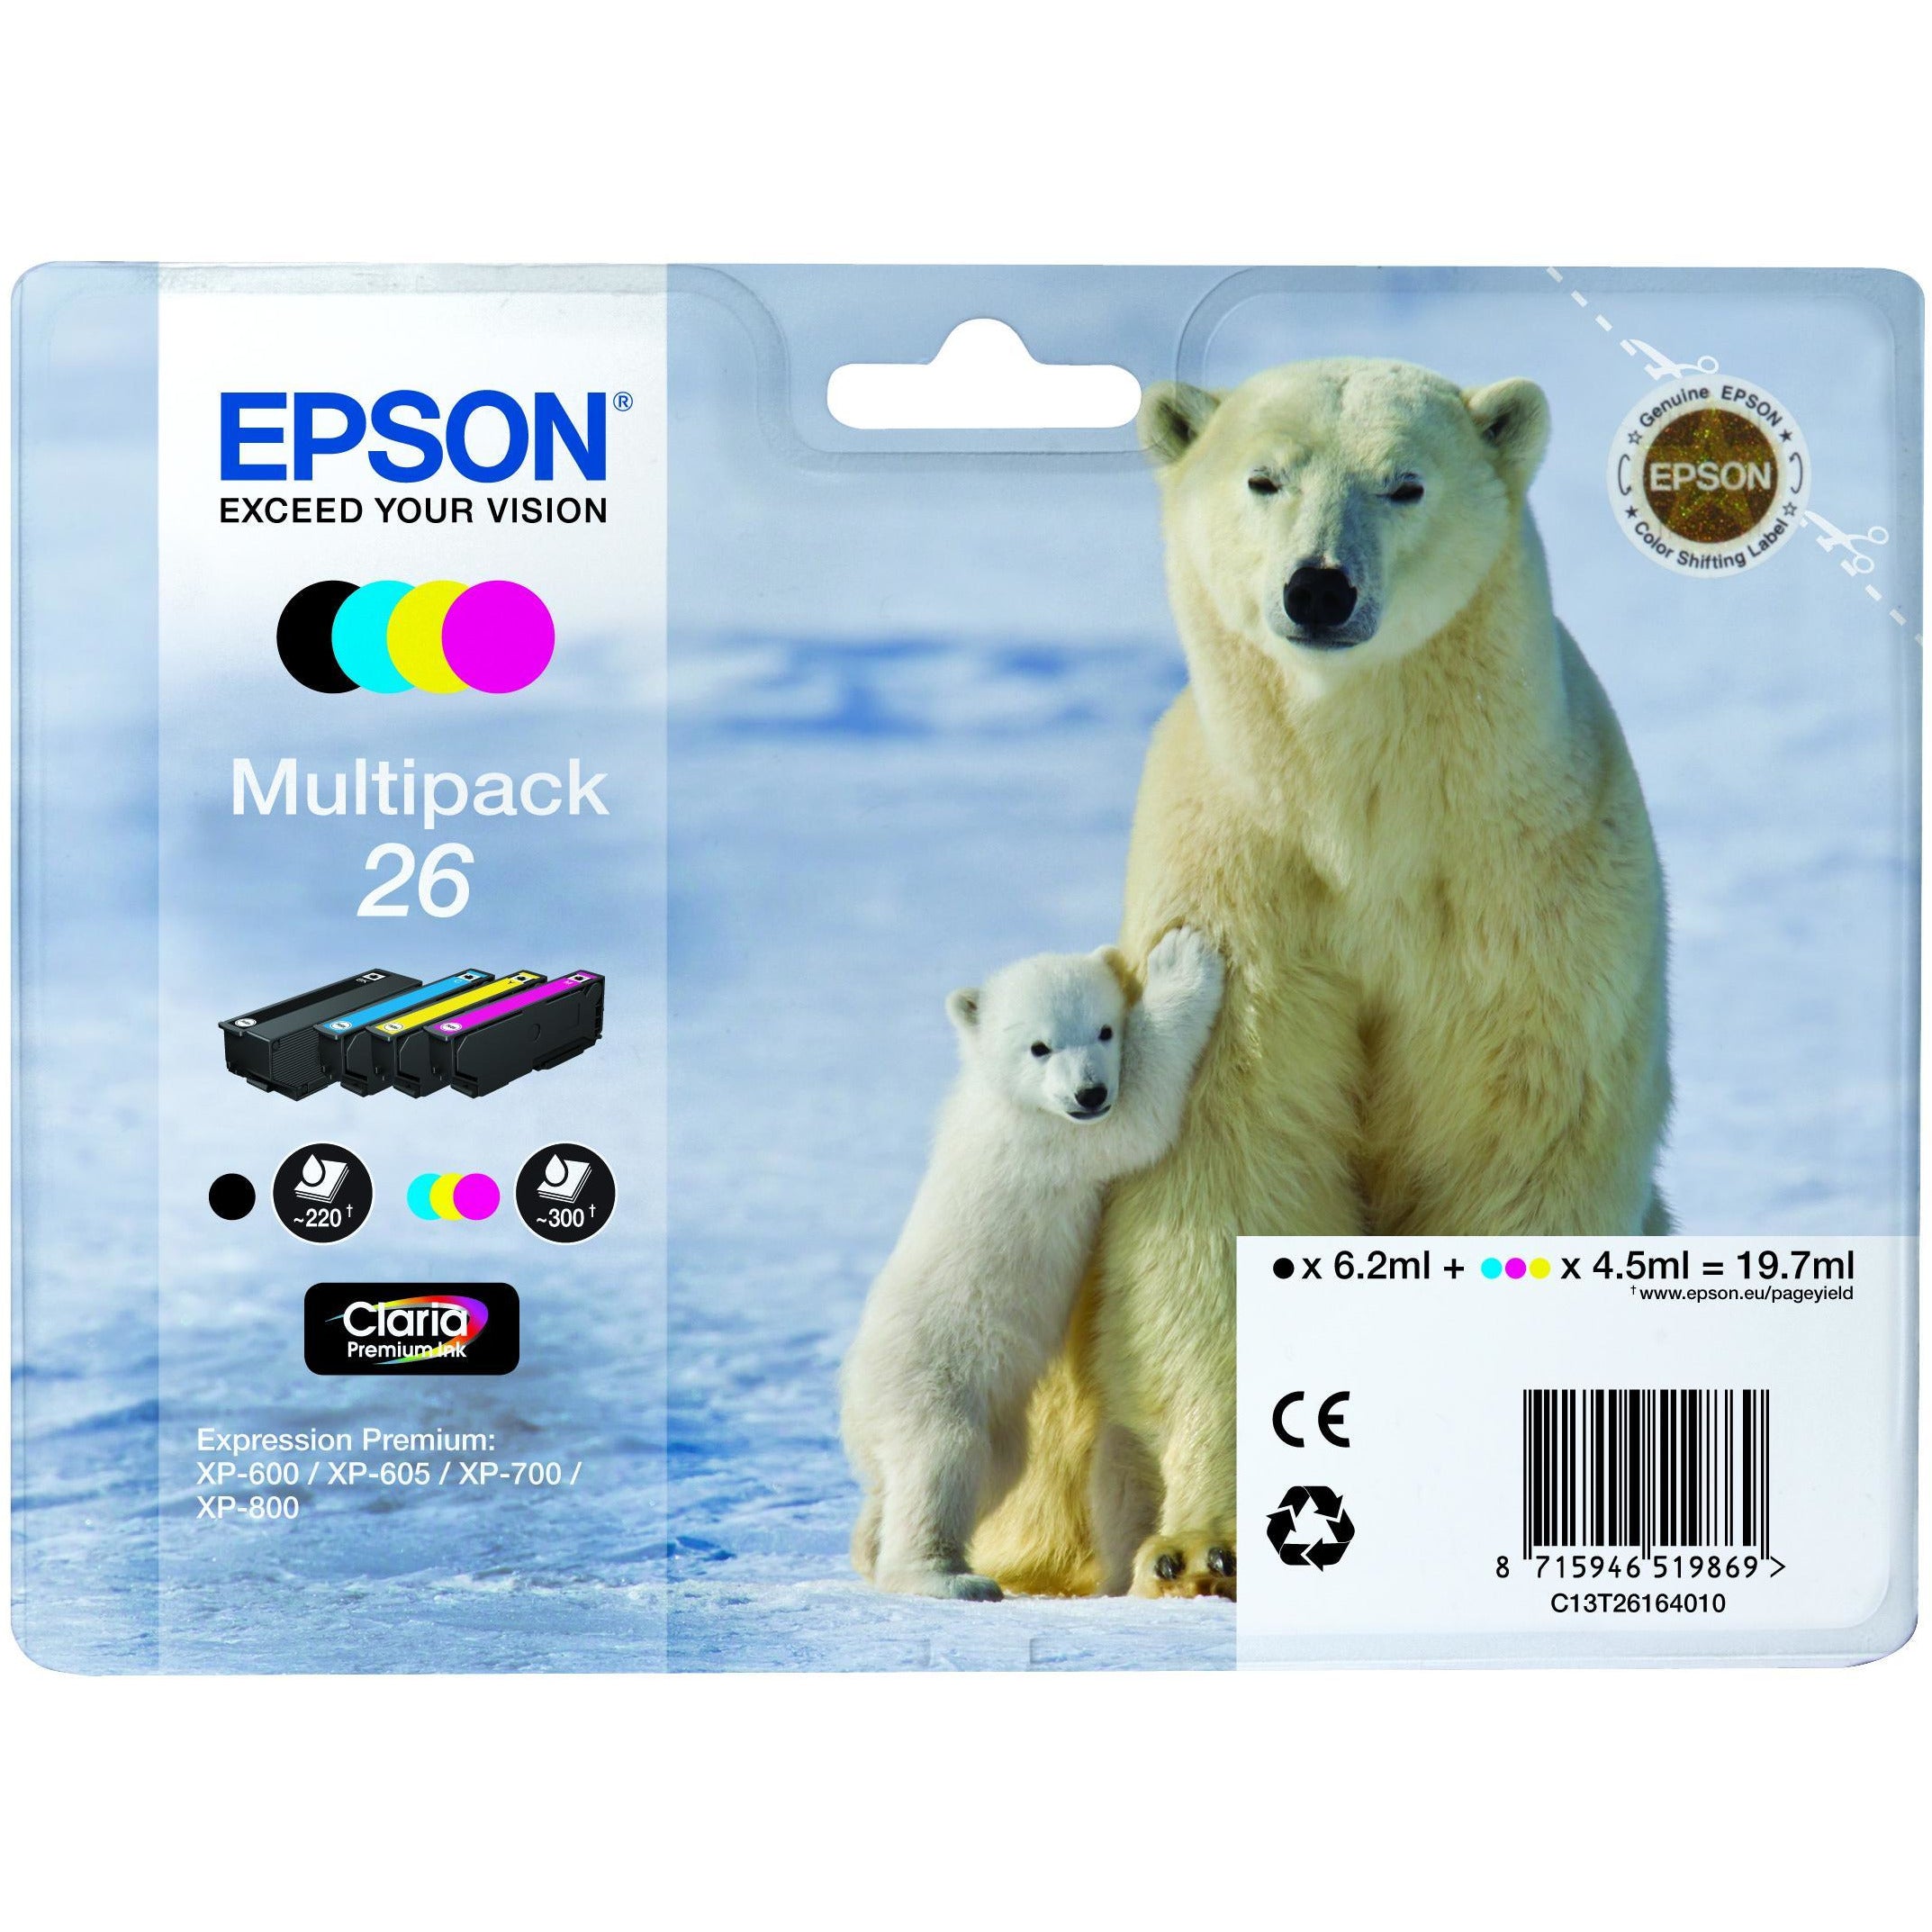 Epson XP600/700/800 Bk/C/M/Y Pack 19.7ml